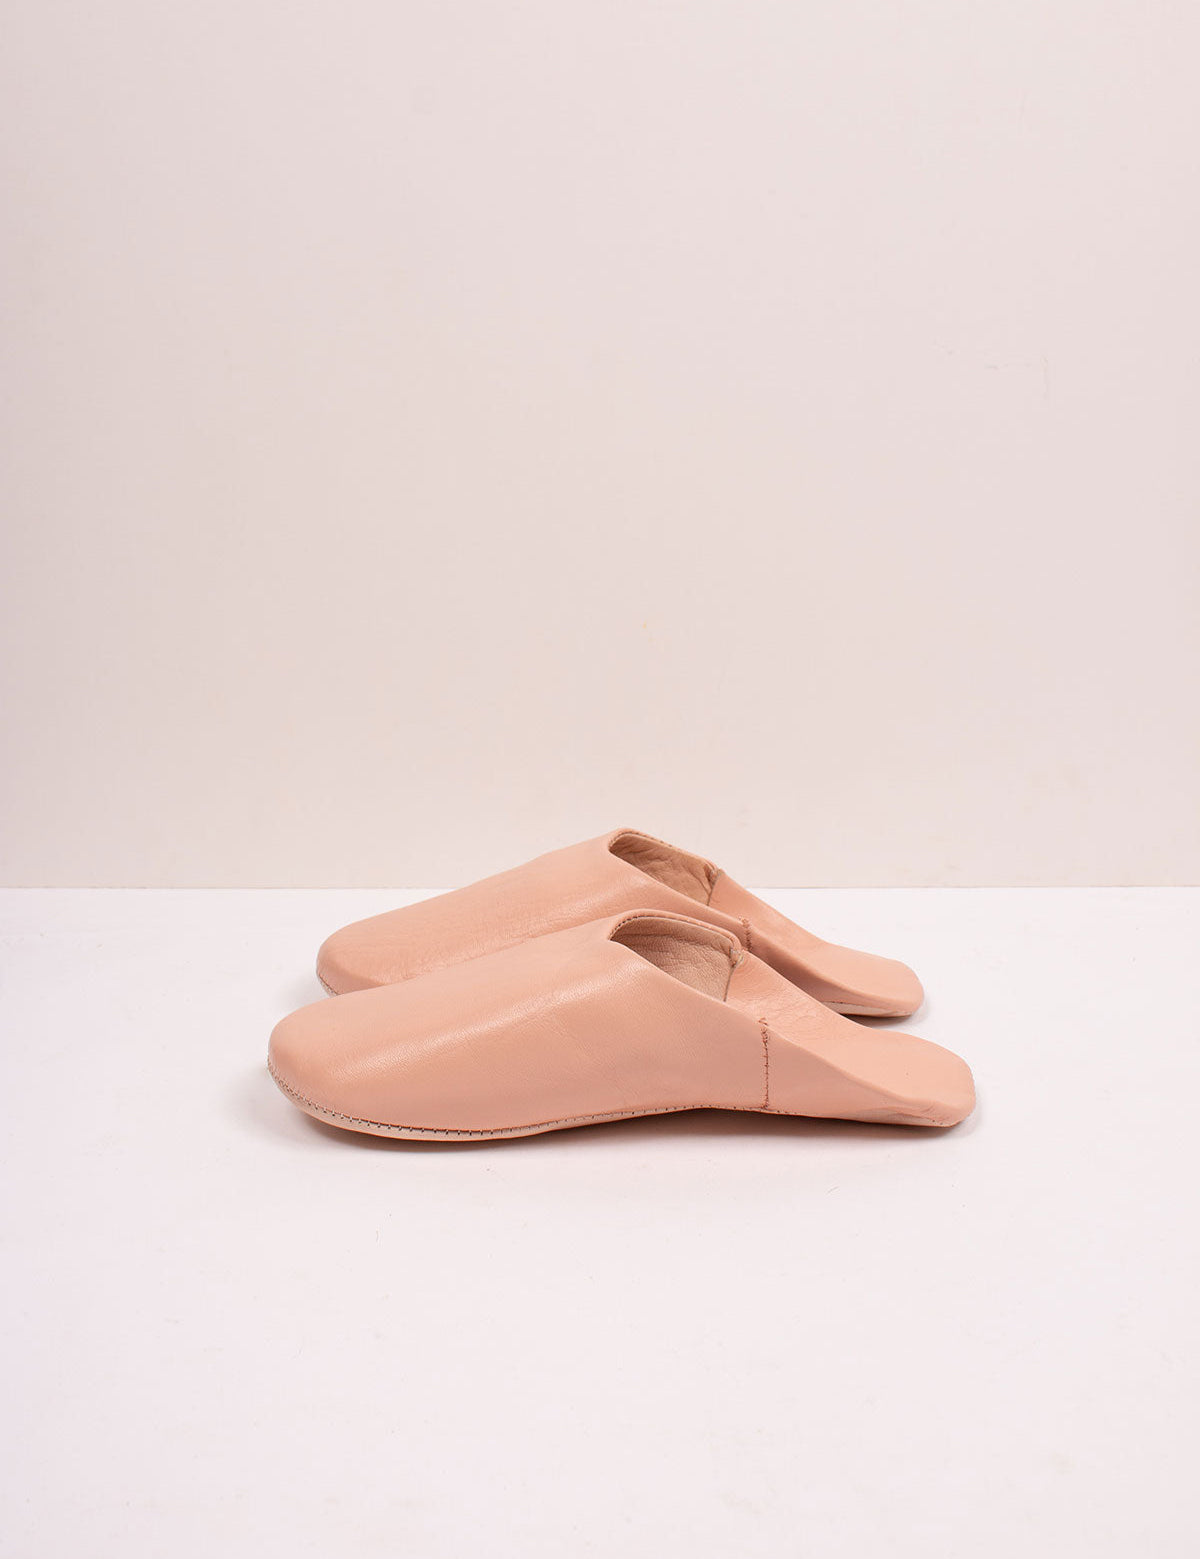 Bohemia-design-moroccan-babouche-slippers-ballet-pink.jpg